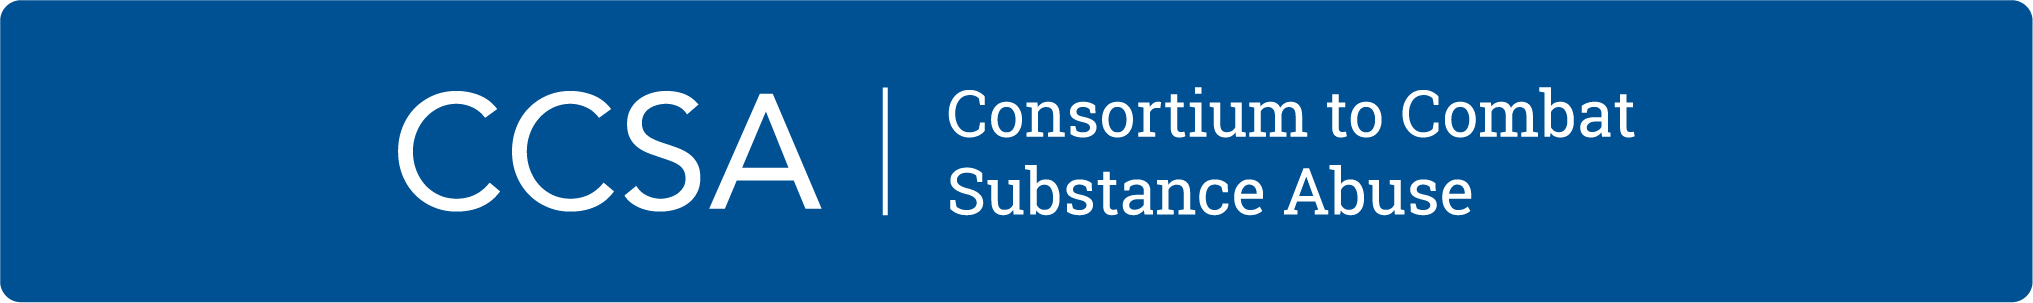 CCSA | Consortium to Combat Substance Abuse